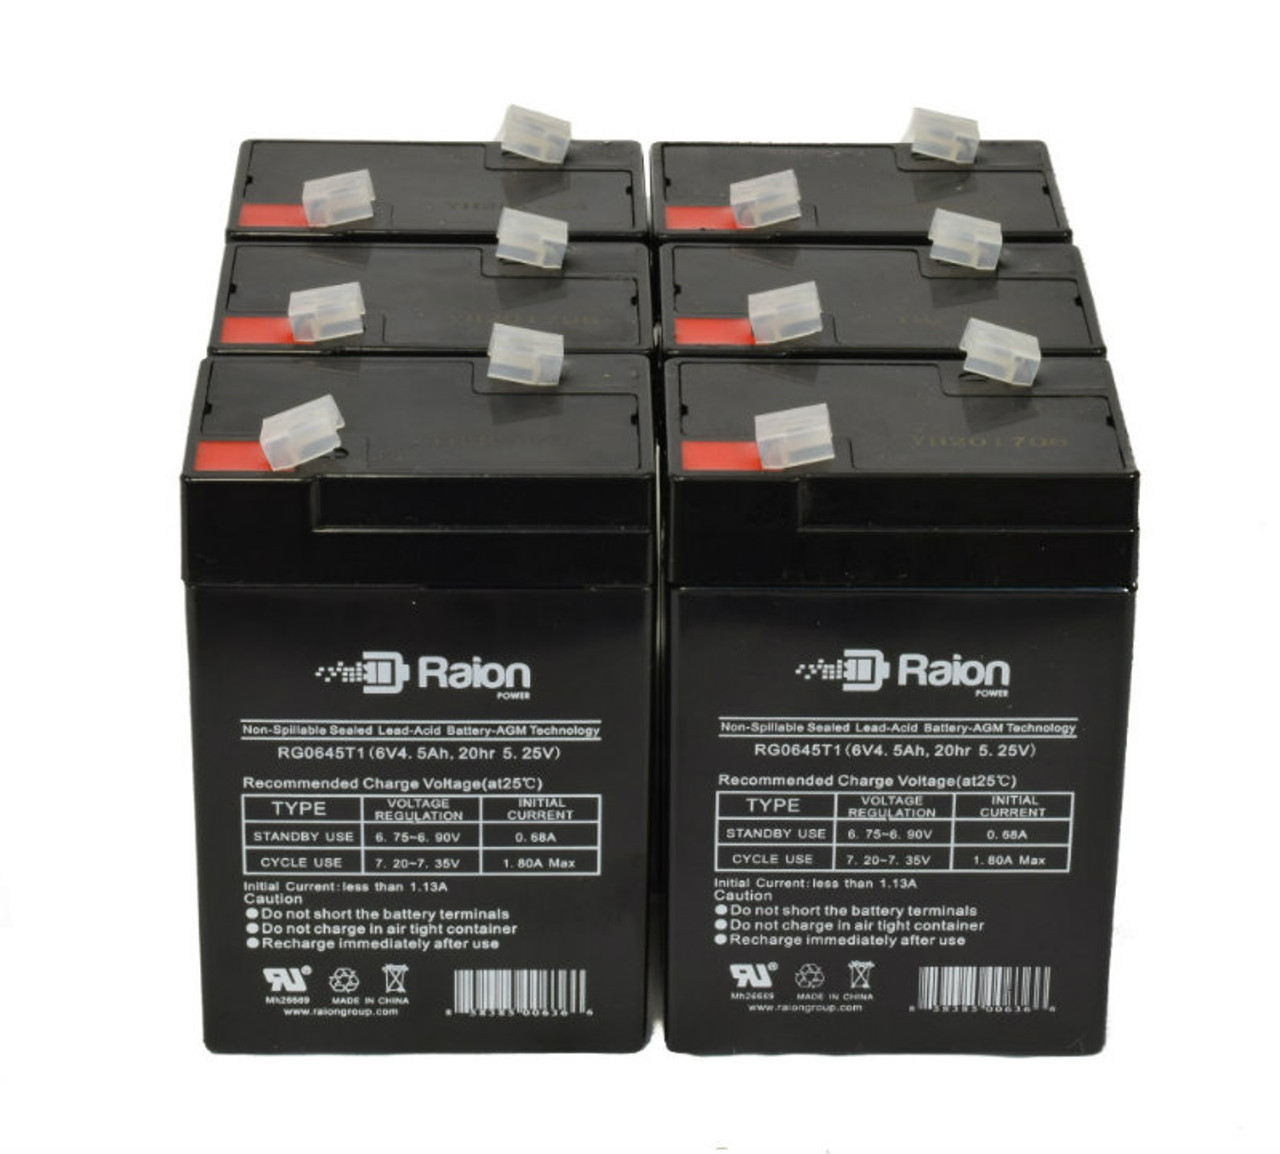 Raion Power 6 Volt 4.5Ah RG0645T1 Replacement Battery for Leoch LP6-5.4 - 6 Pack